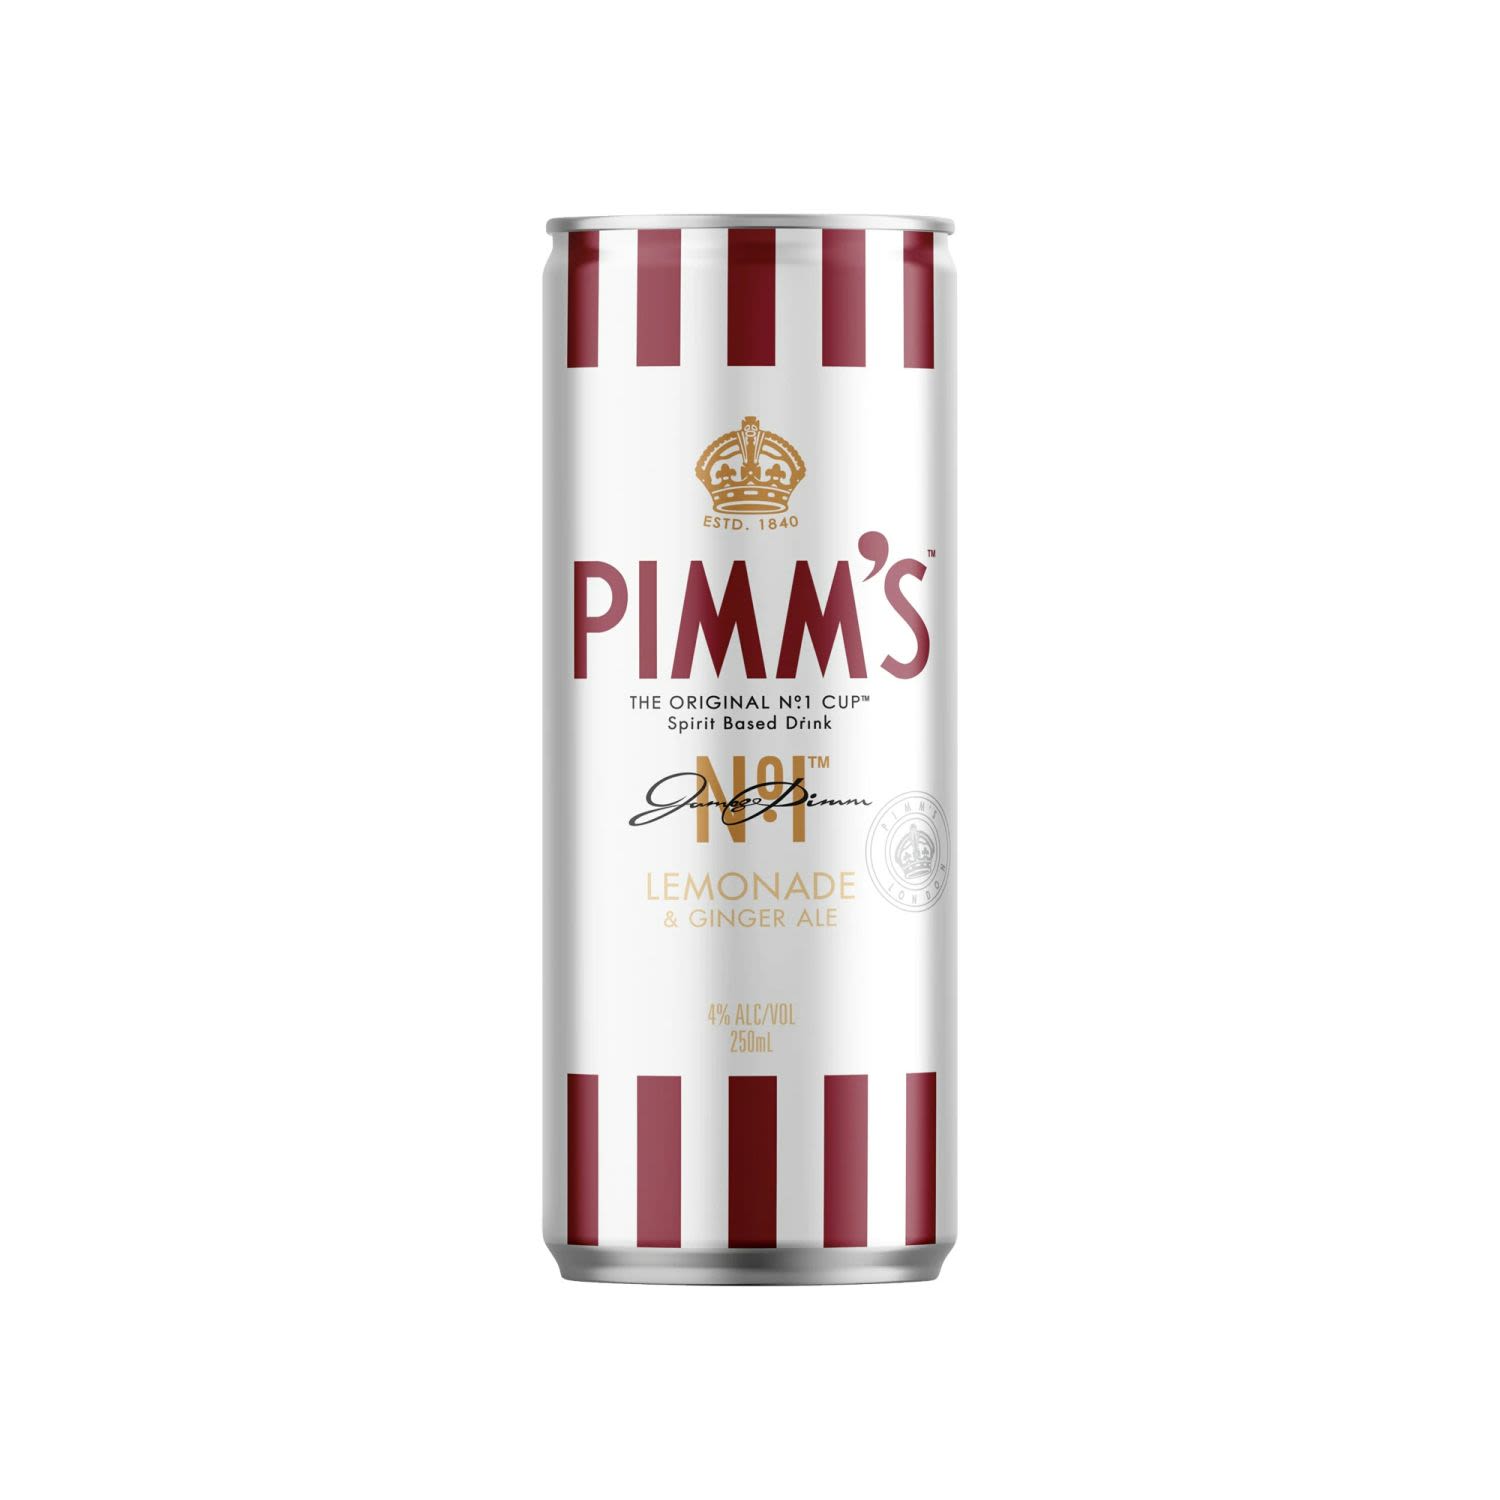 Pimm's Lemonade & Ginger Ale Cans 250mL<br /> <br />Alcohol Volume: 4.00%<br /><br />Pack Format: Can<br /><br />Standard Drinks: 0.8<br /><br />Pack Type: Can<br />